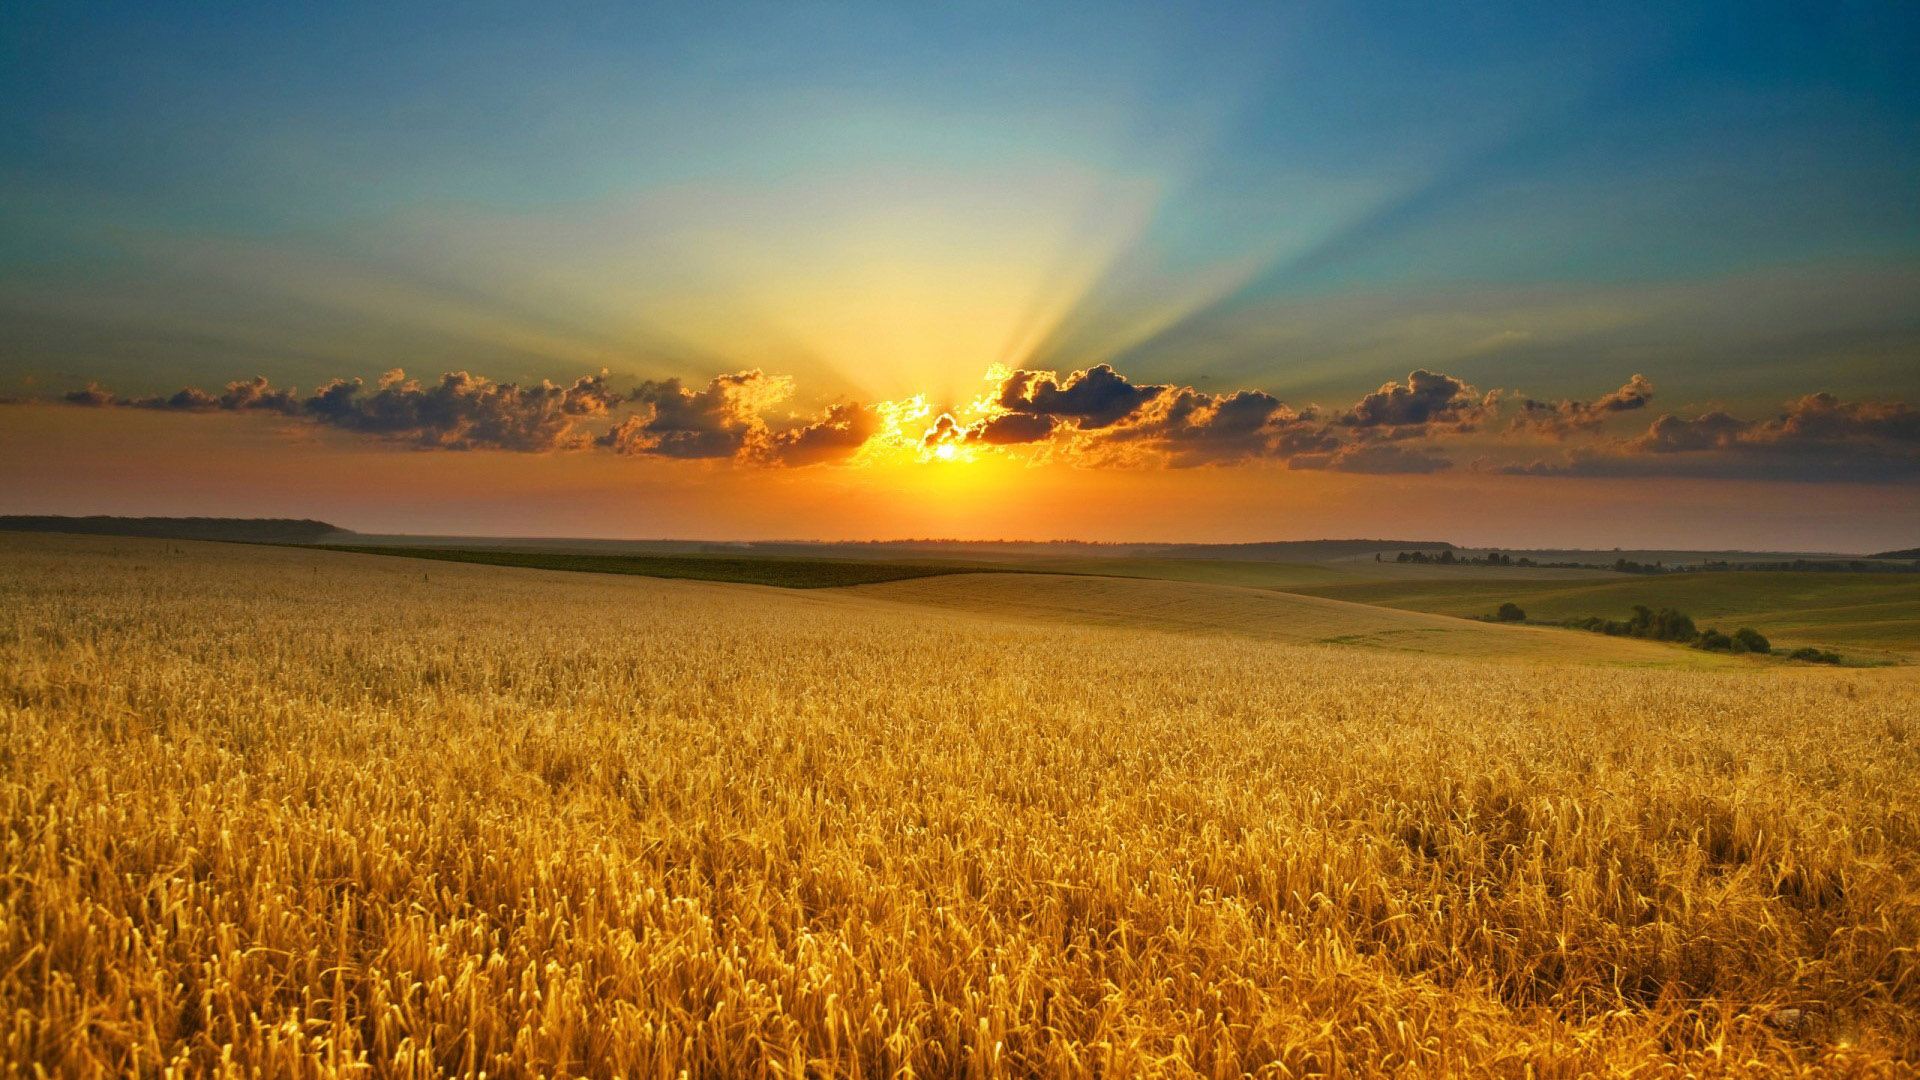 A sunset over an open field of wheat - Farm